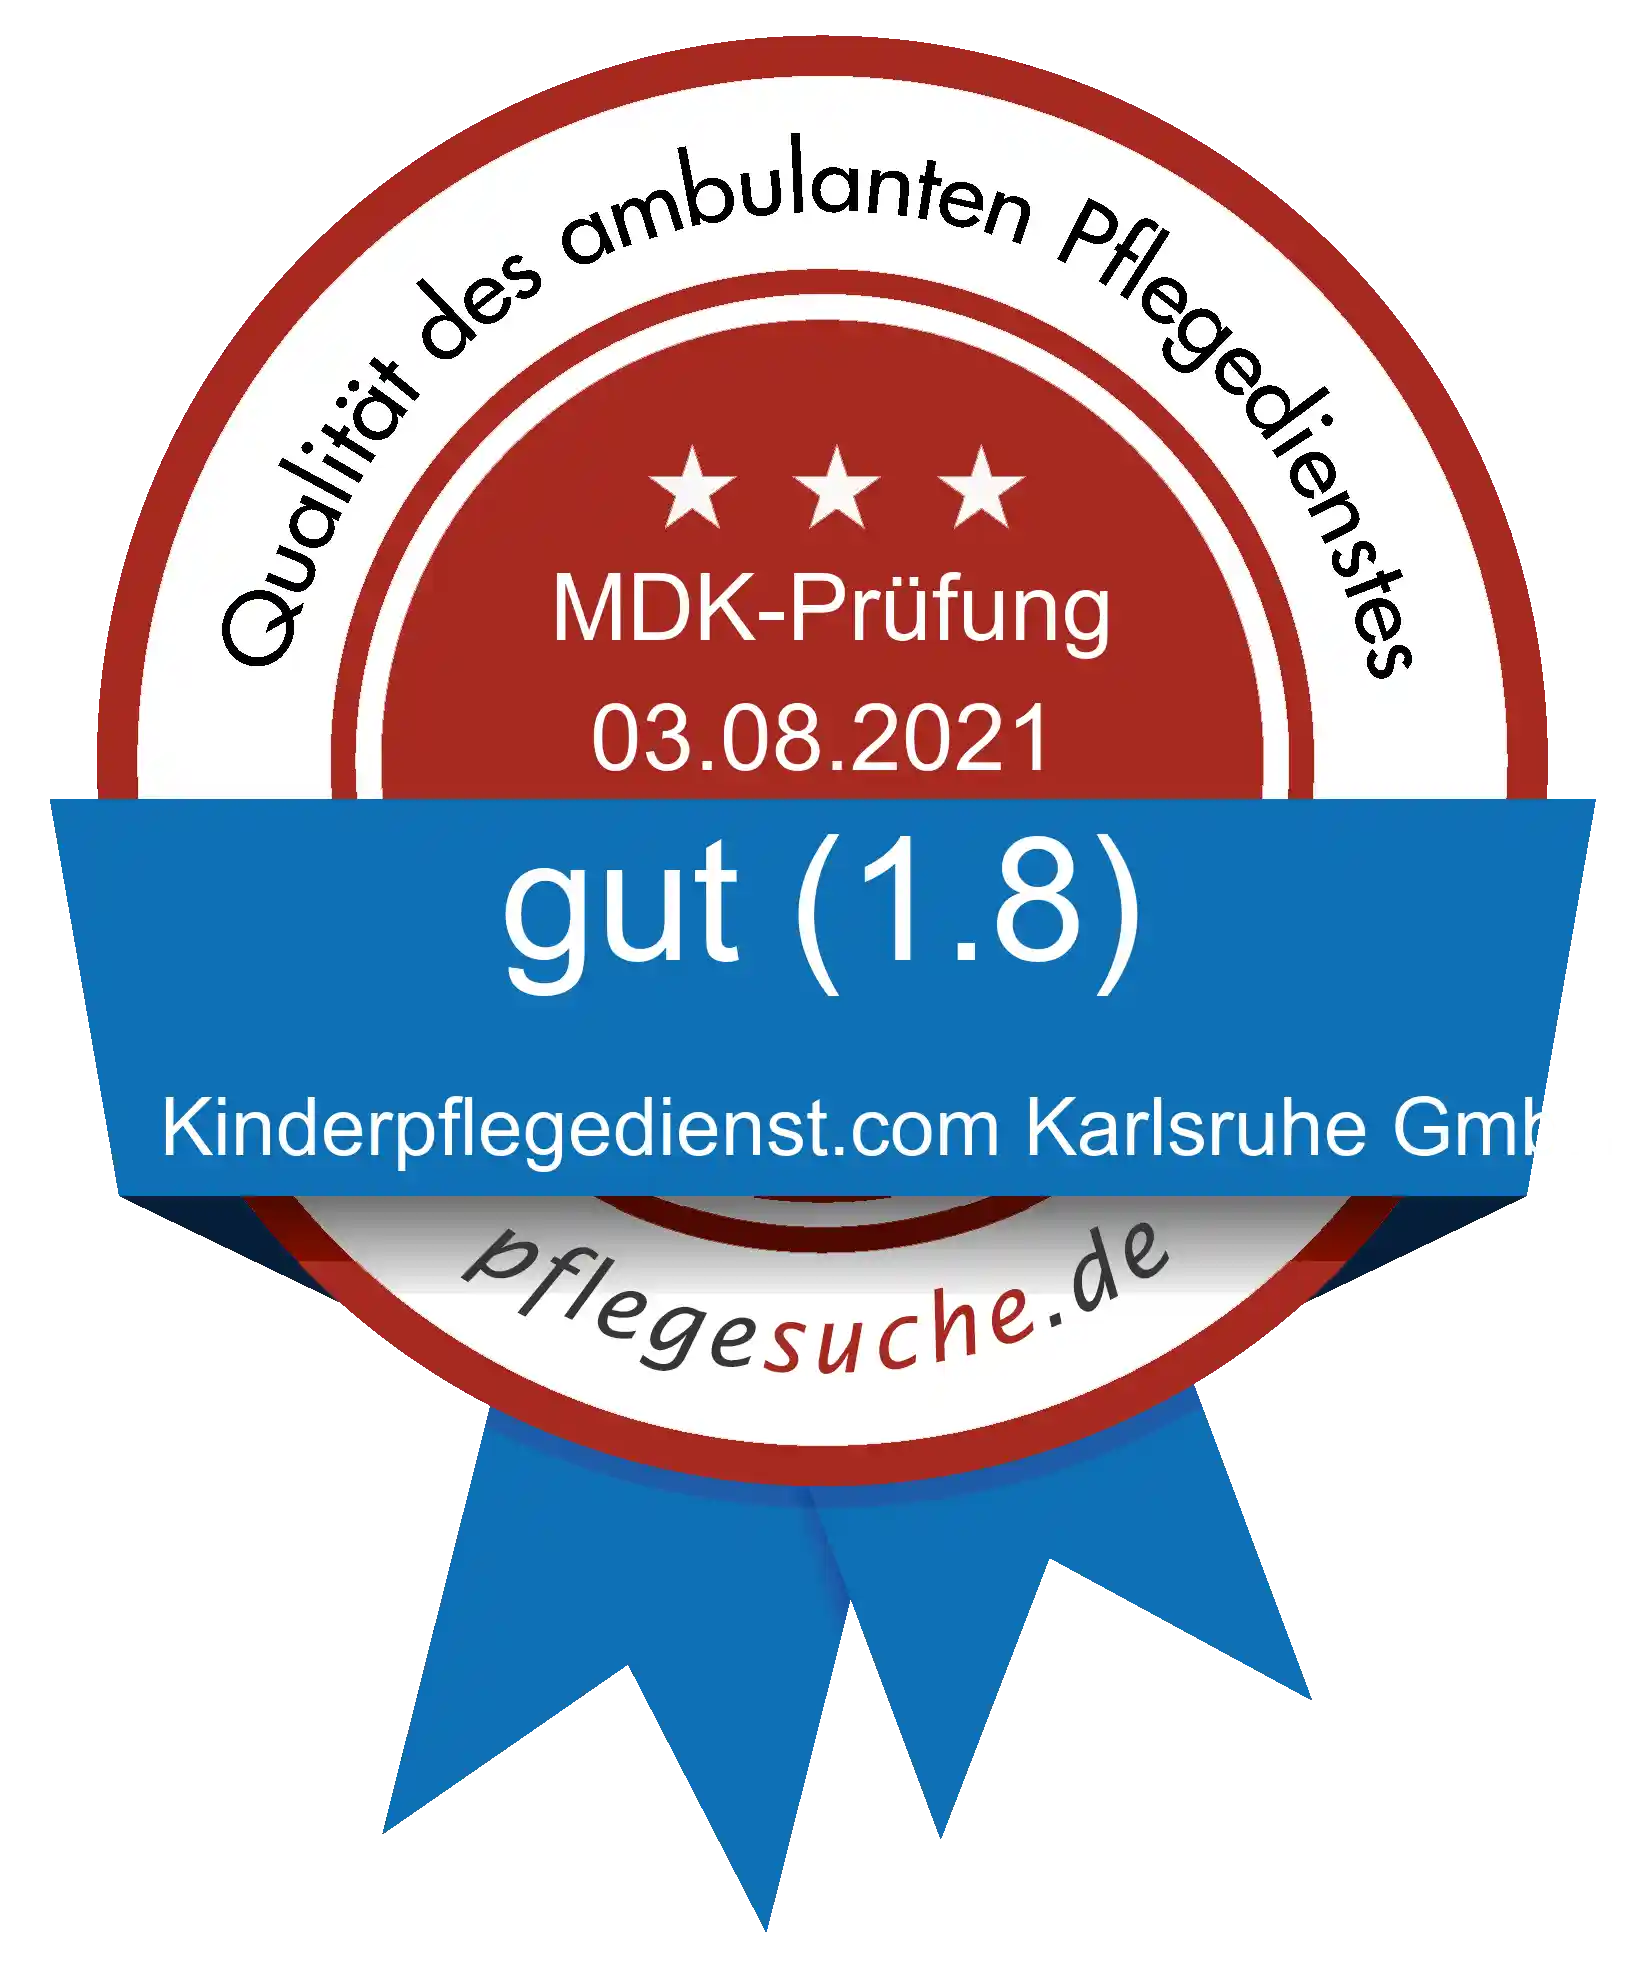 Siegel Benotung Kinderpflegedienst.com Karlsruhe GmbH